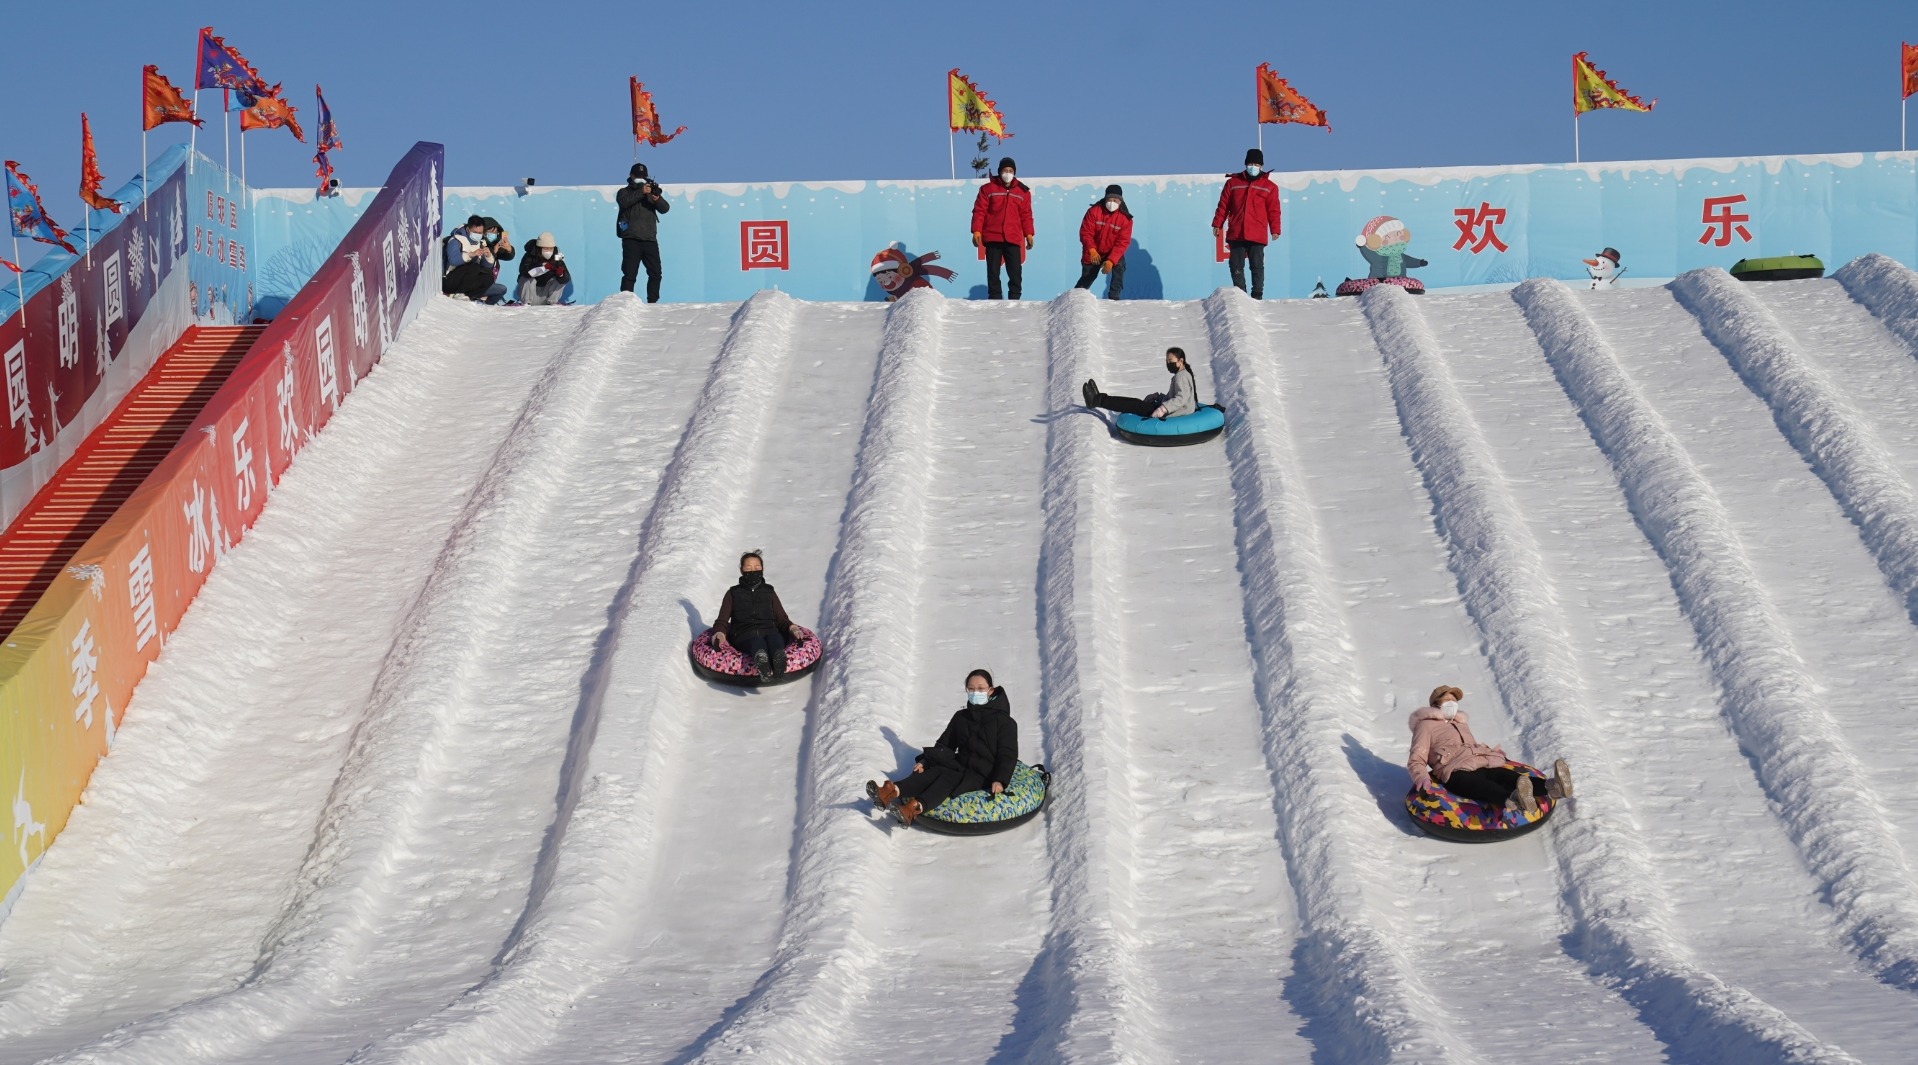 吉雪滑雪场雪圈图片